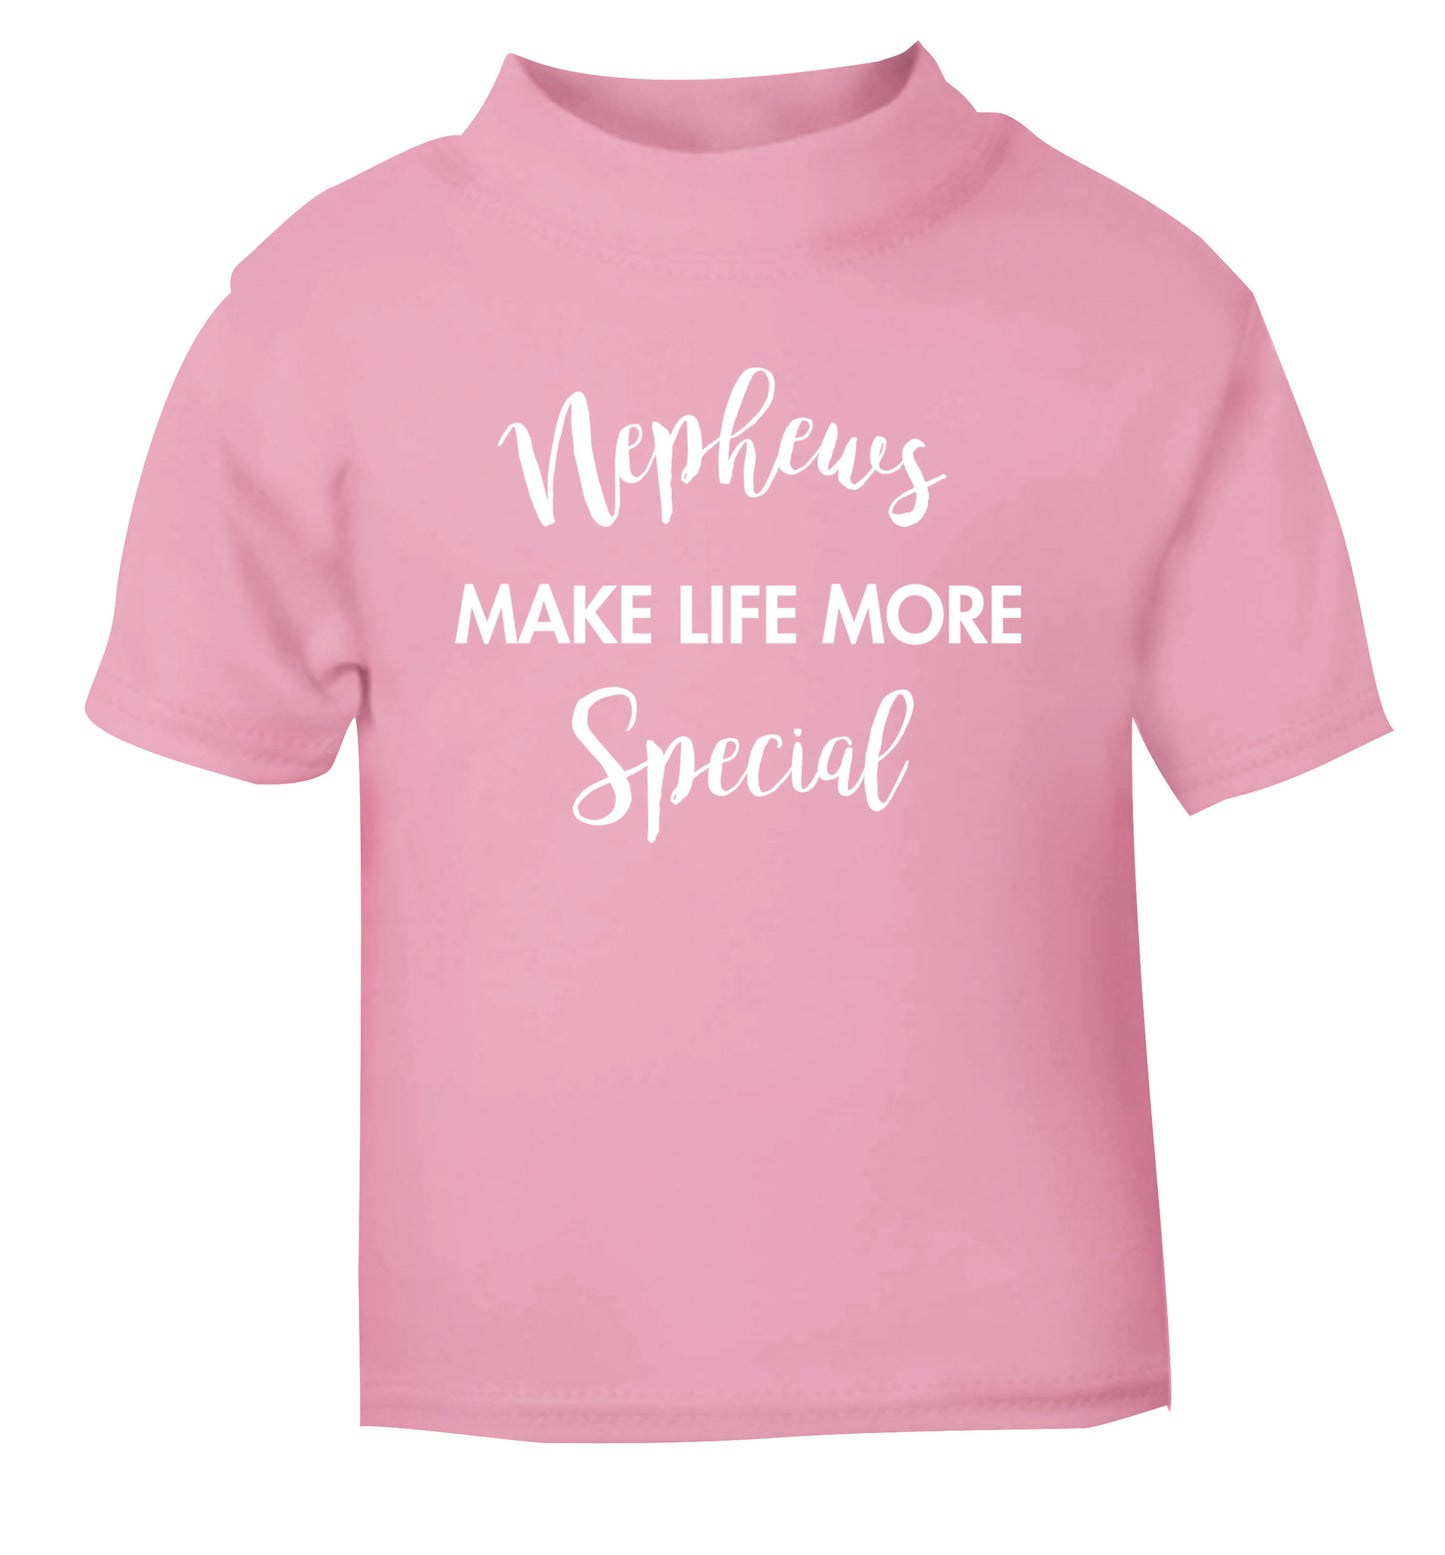 Nephews make life more special light pink Baby Toddler Tshirt 2 Years